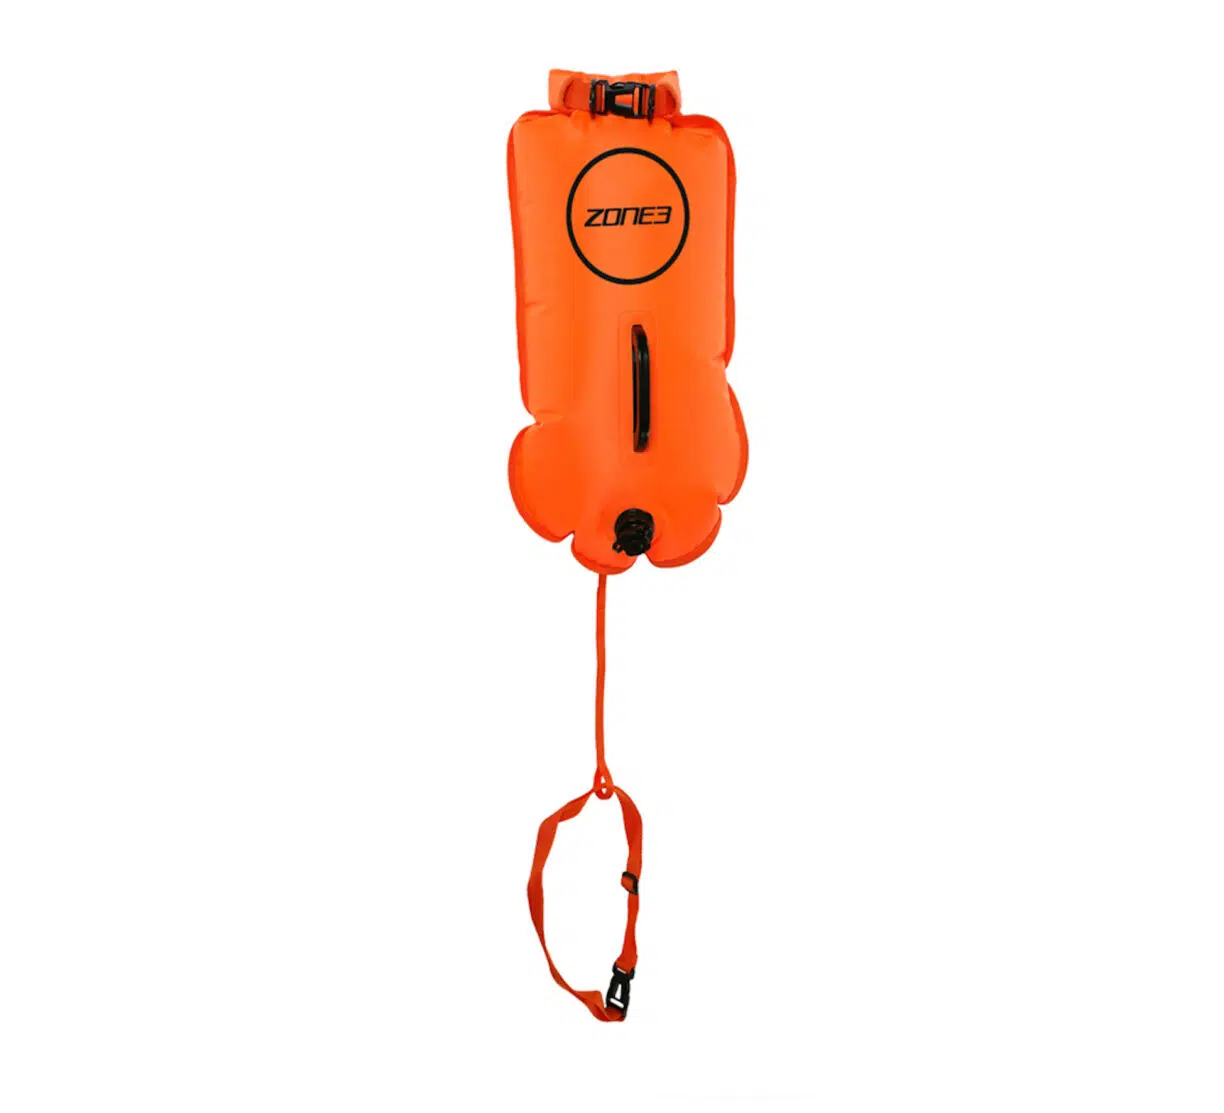 Zone3 ow accessories 28l swim buoy orange cutout